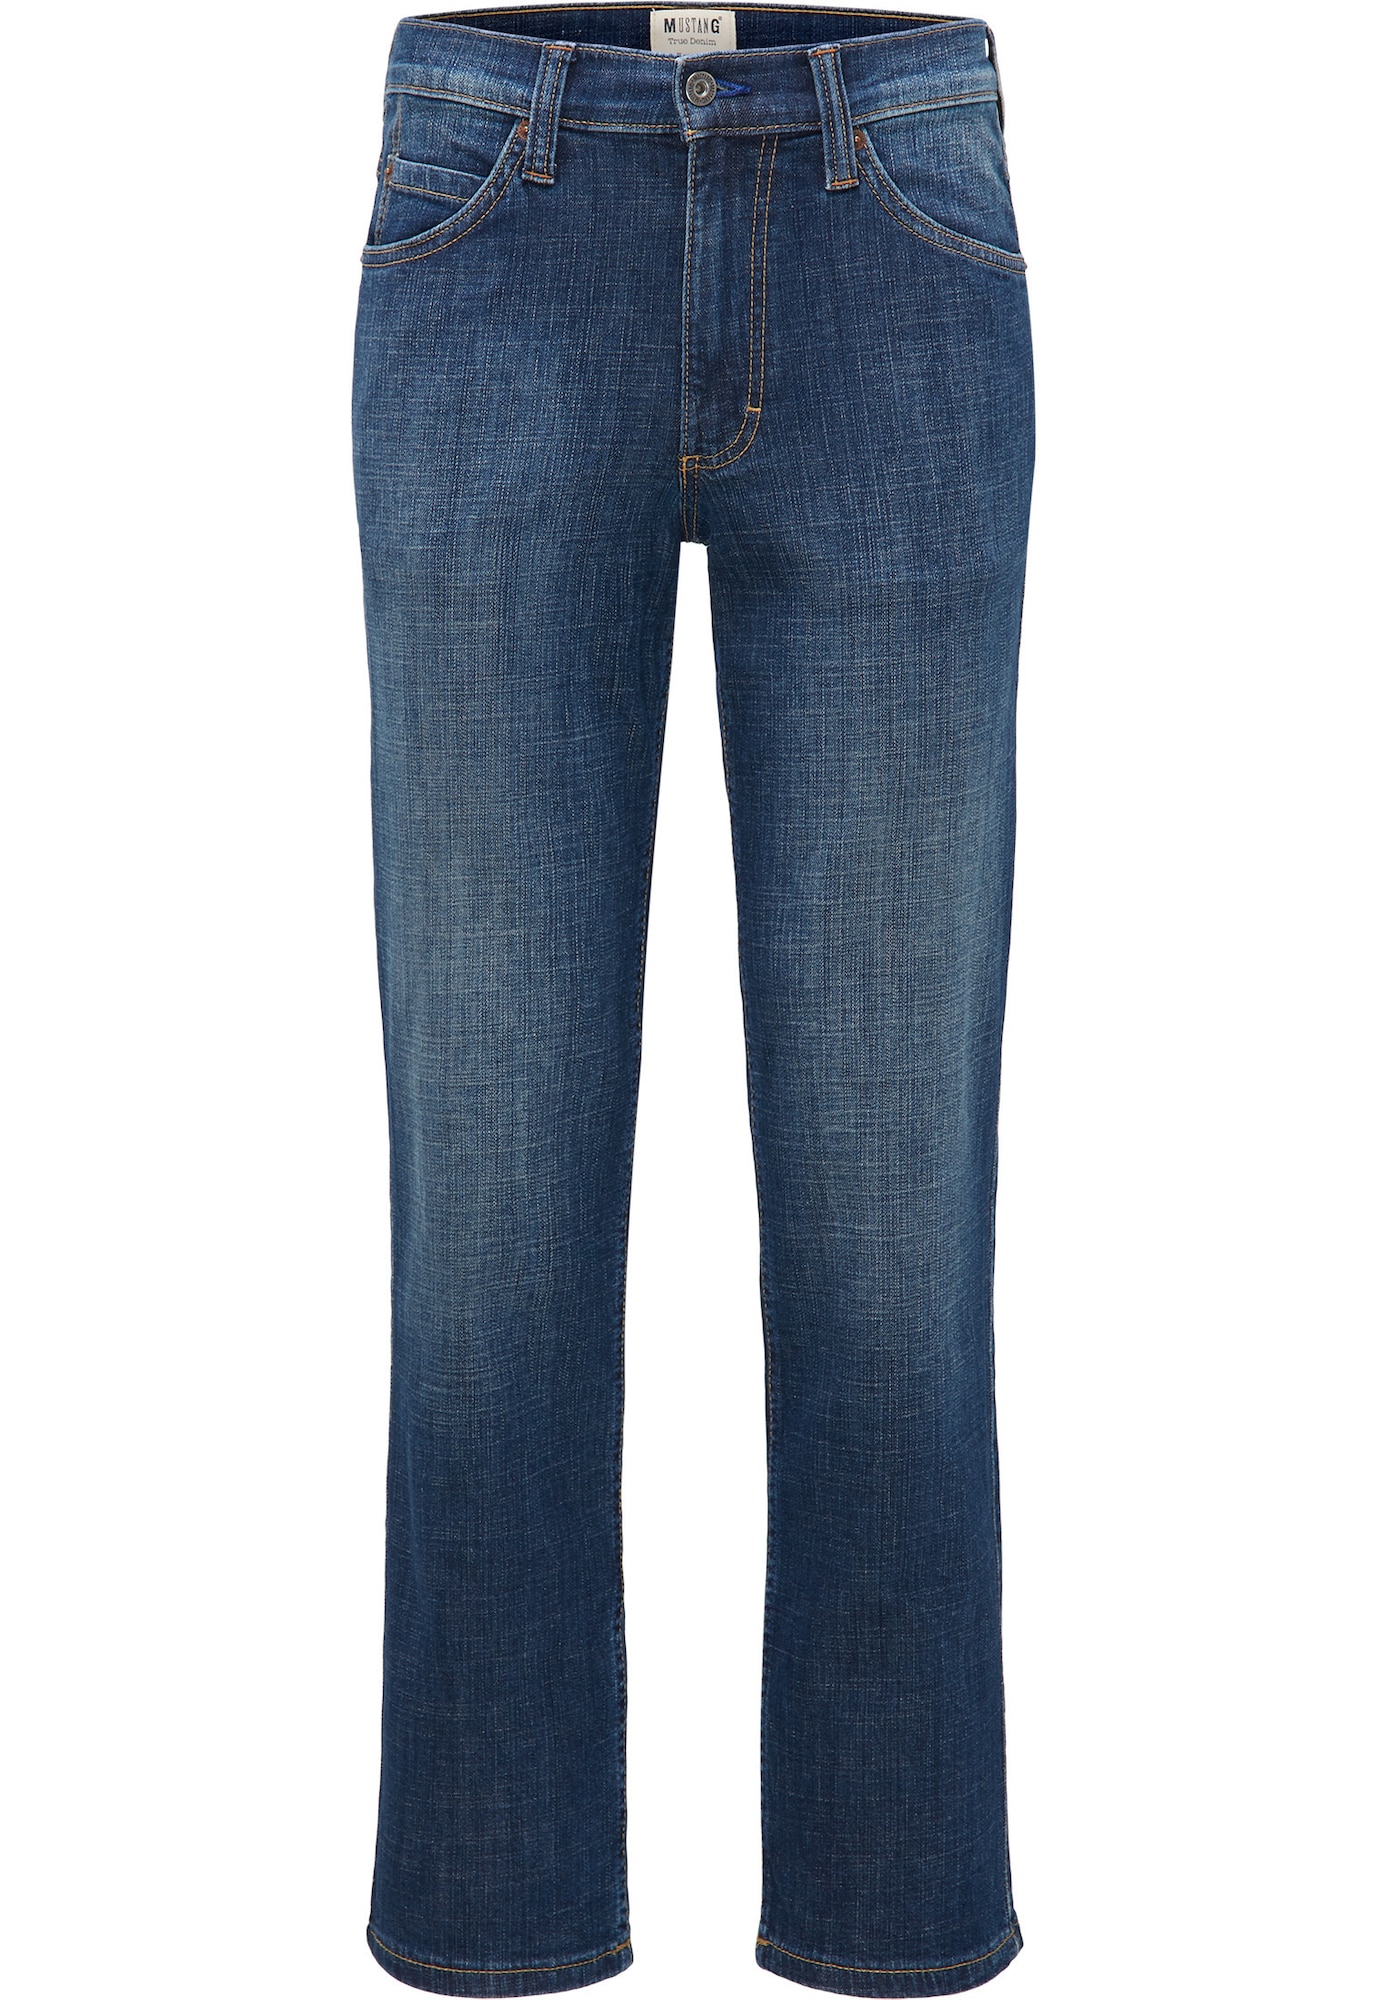 mustang MUSTANG Jeans 'Tramper' blue denim